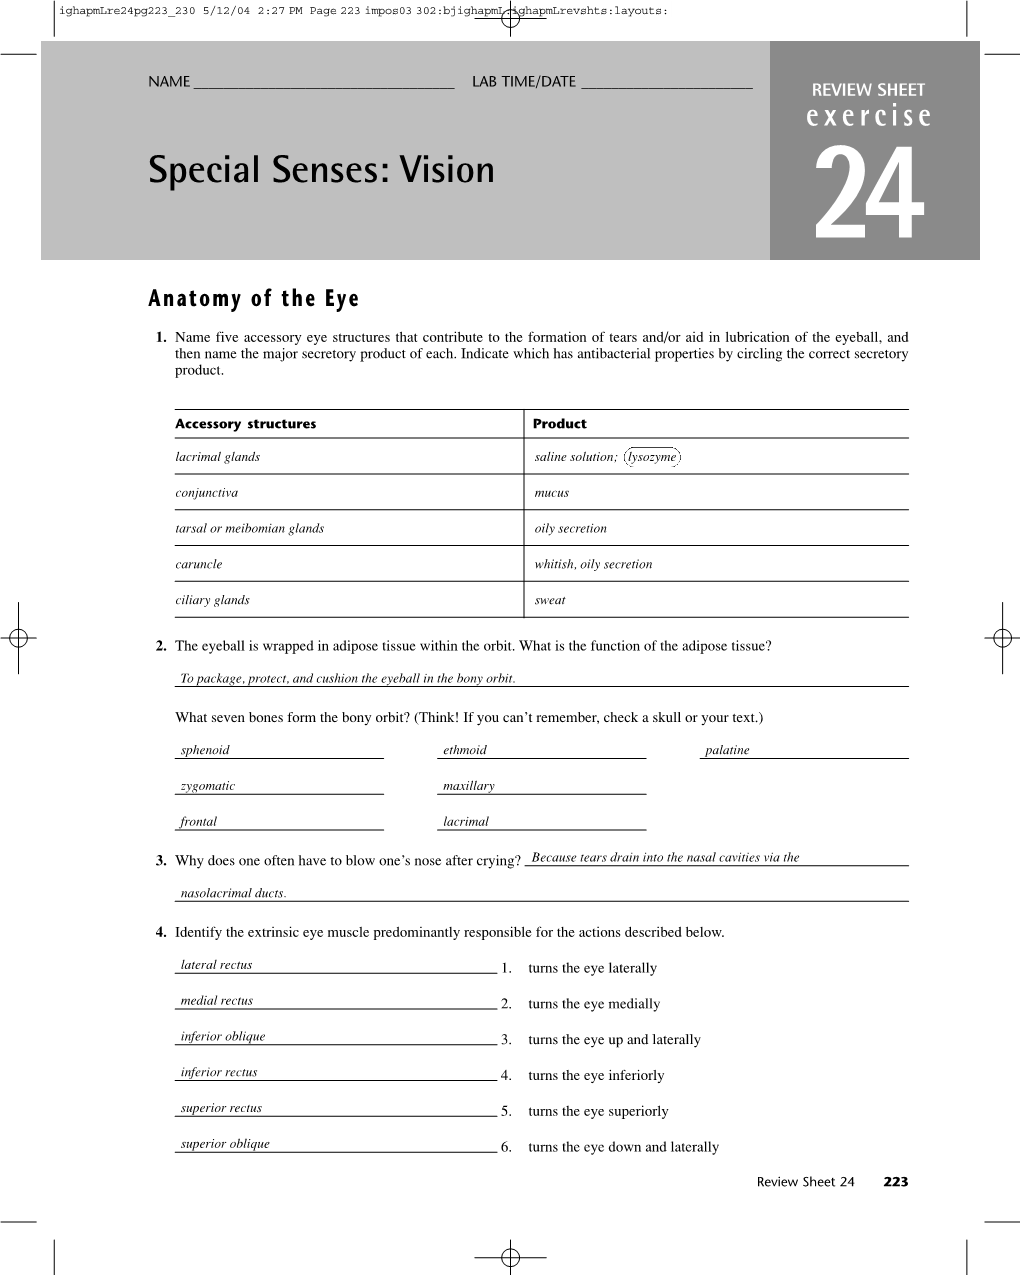 Vision 24 Anatomy of the Eye